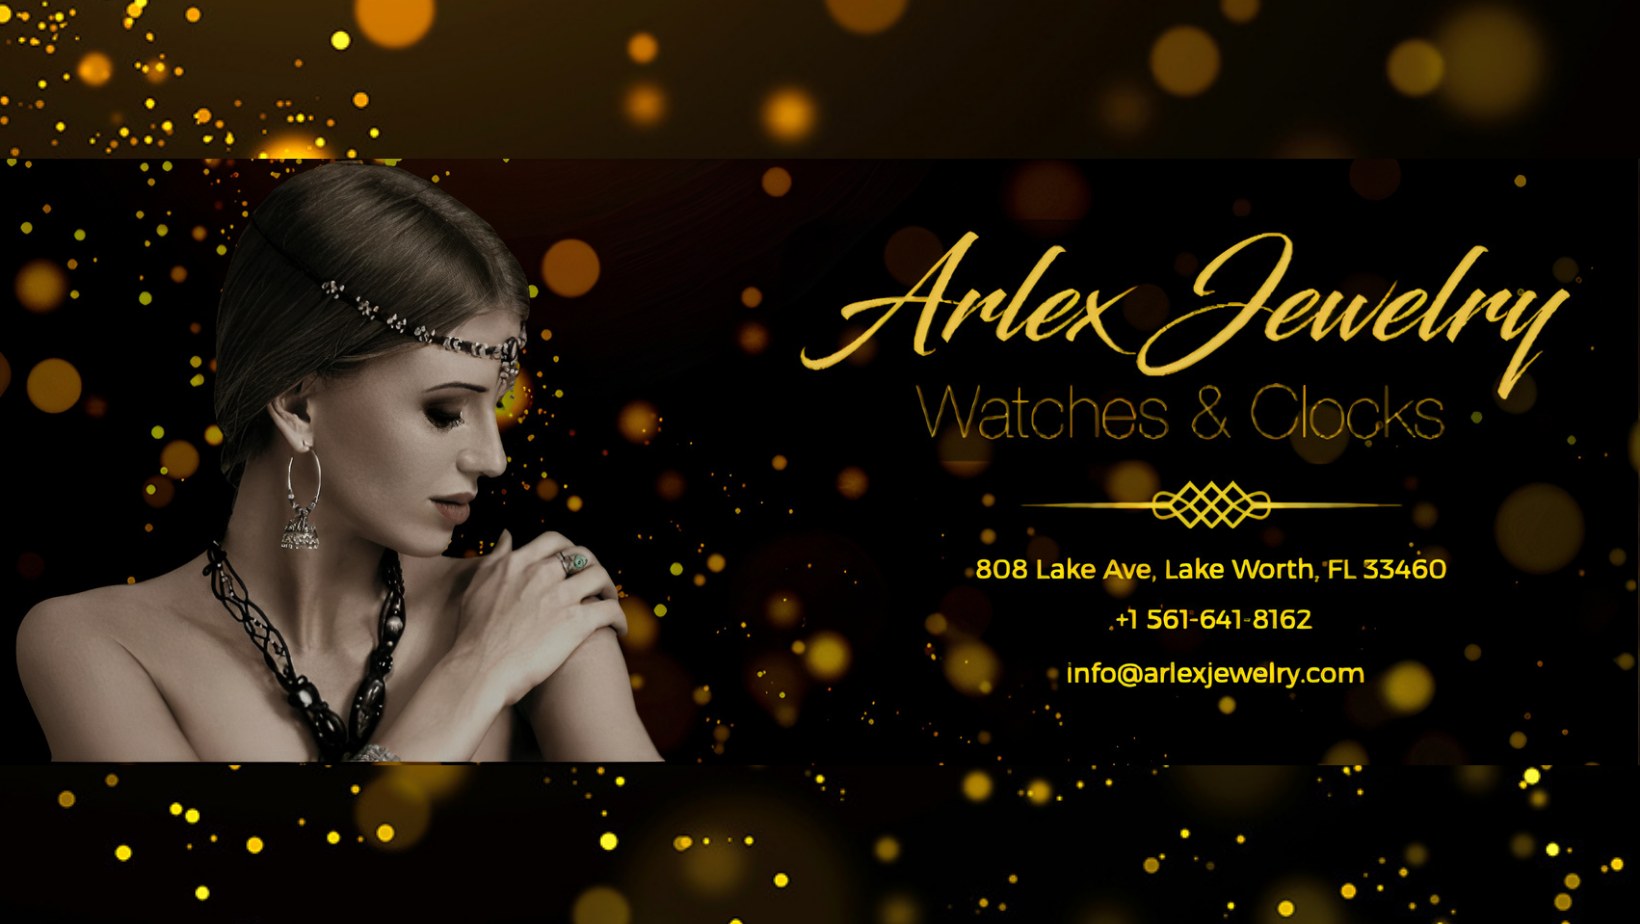 Arlex Jewelry Watches & Clocks